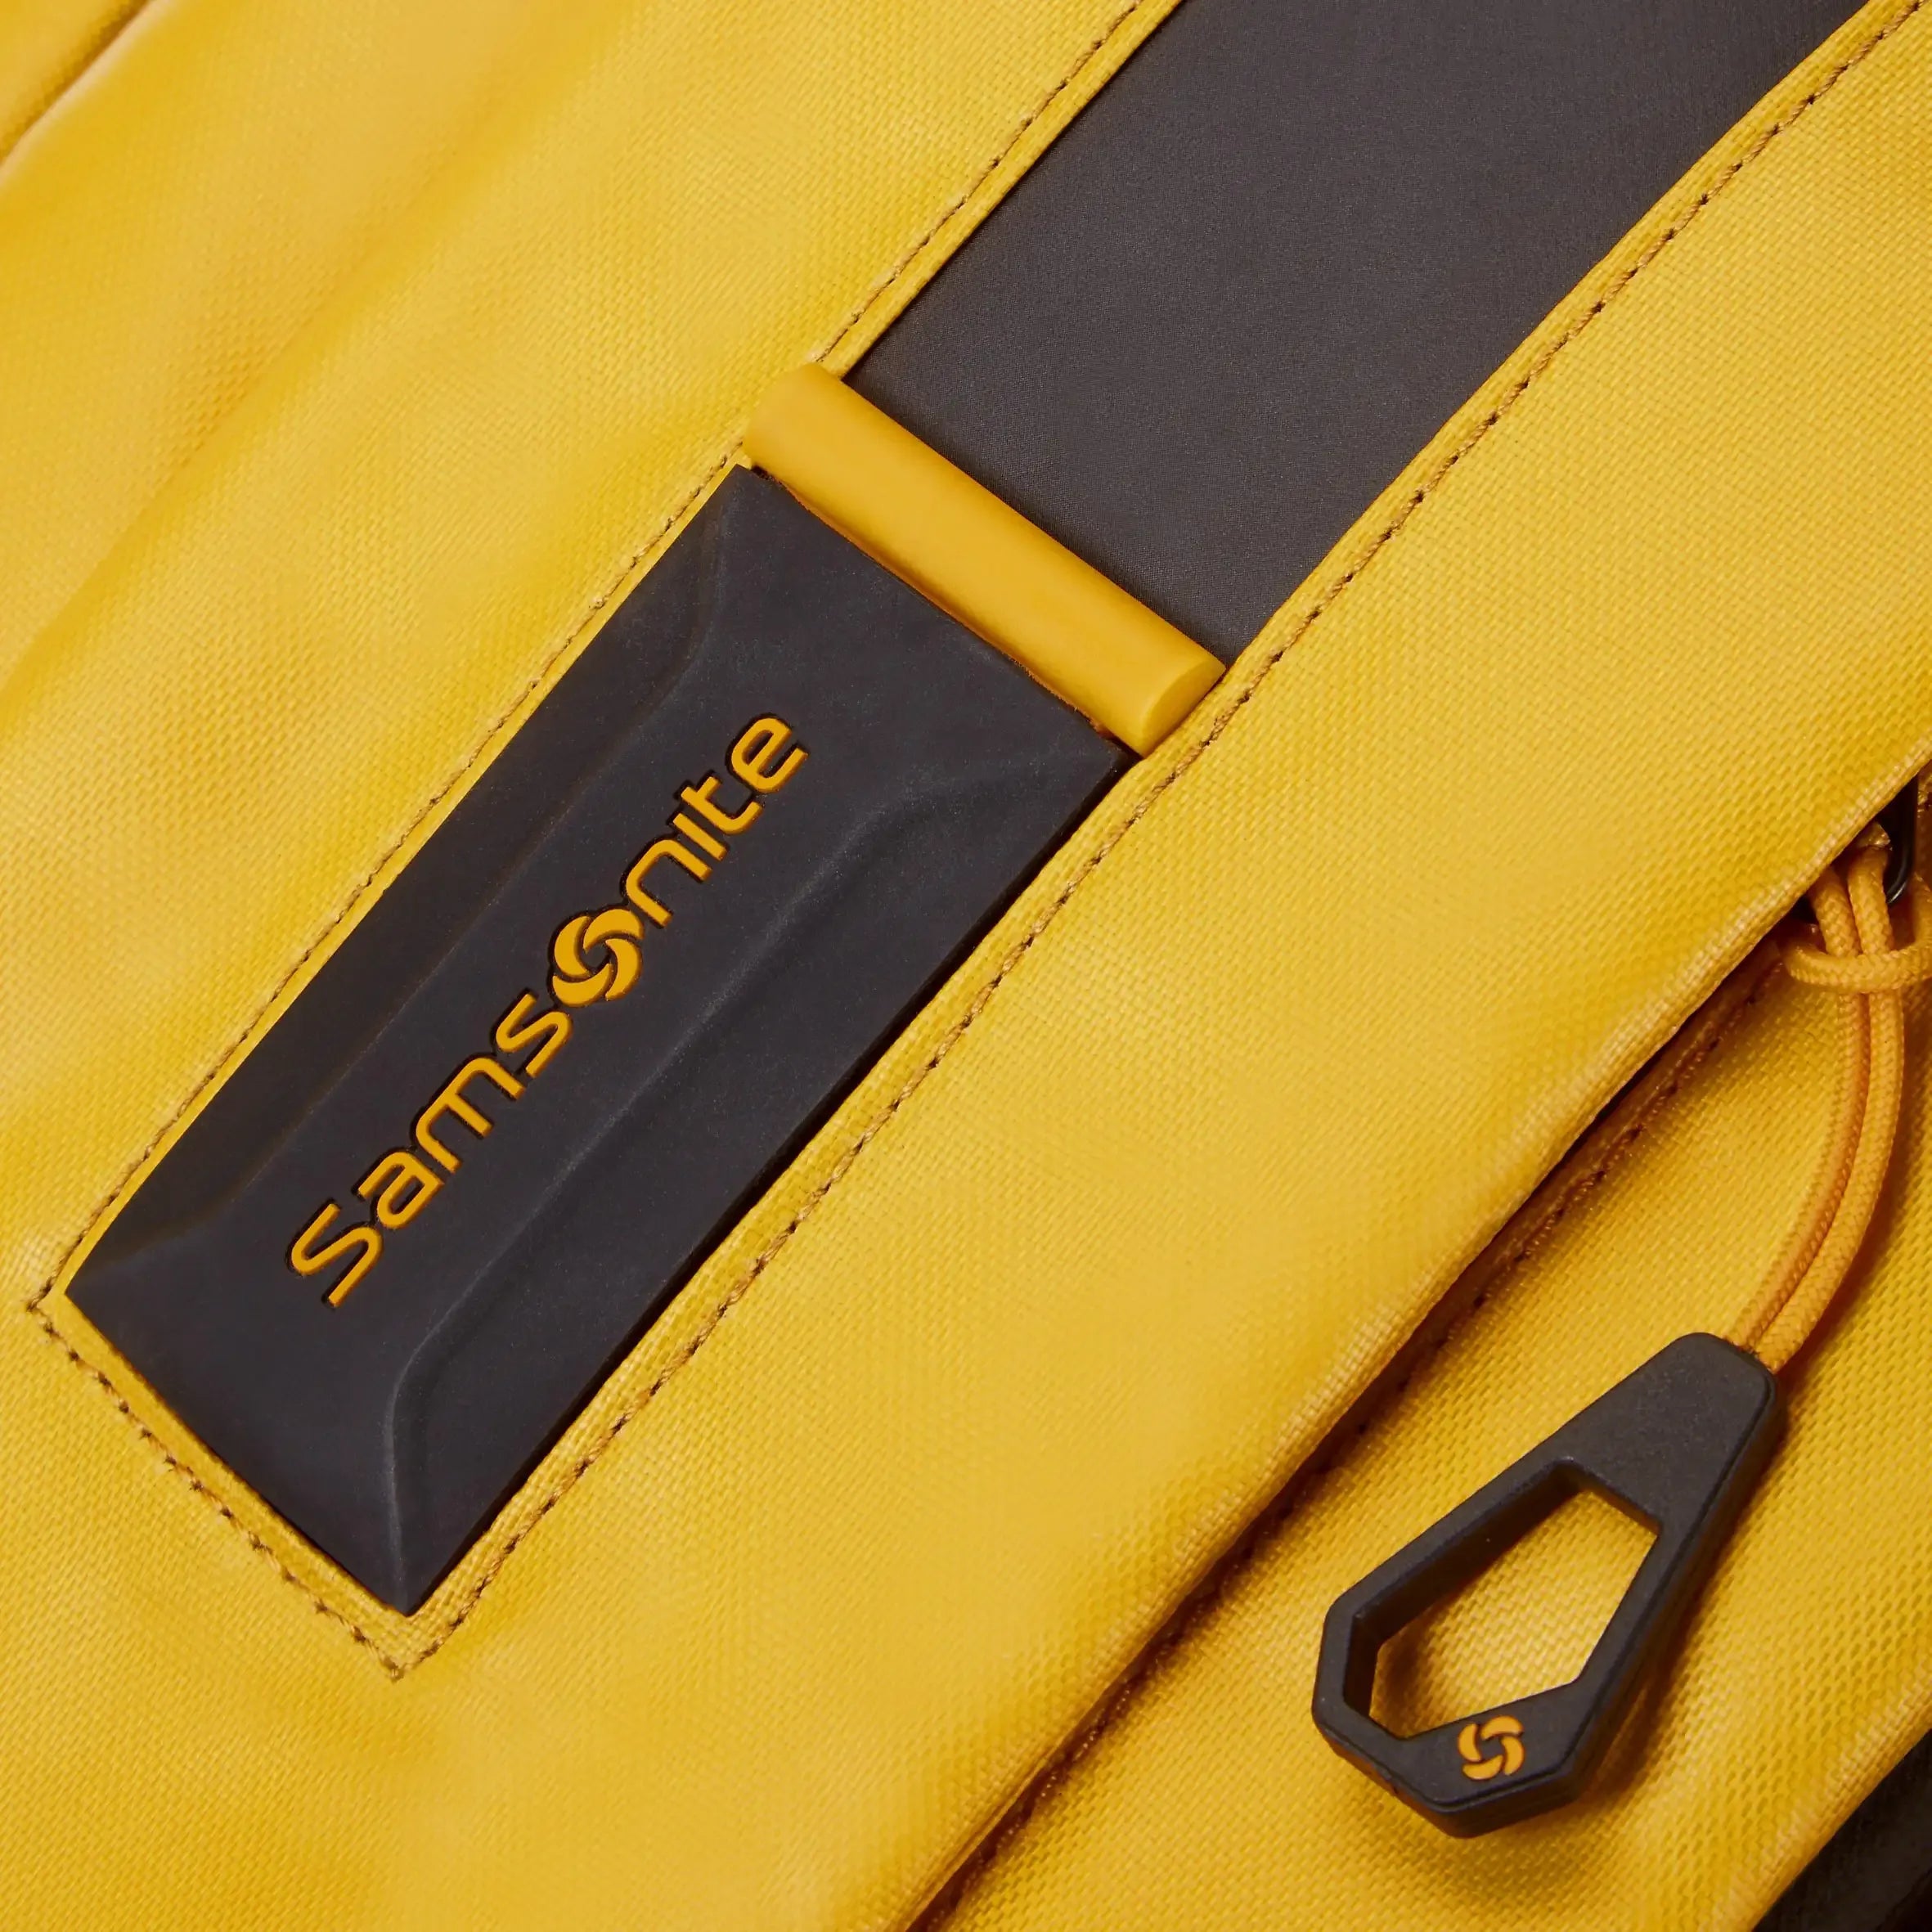 Samsonite Paradiver Light laptop backpack 45 cm - flame orange